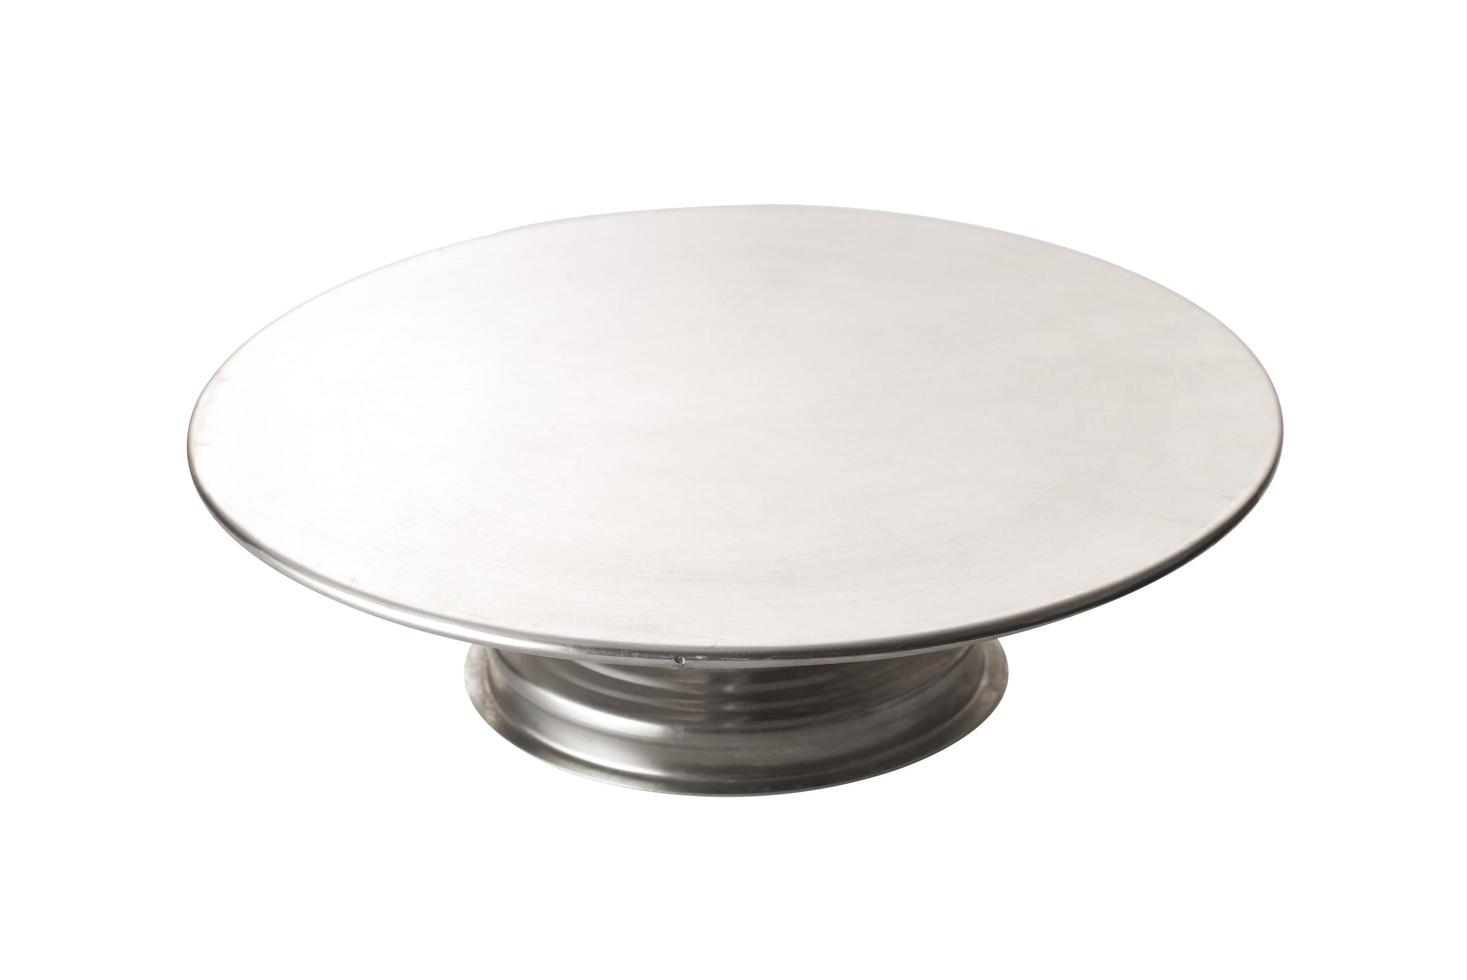 Metal dessert tray on white background photo